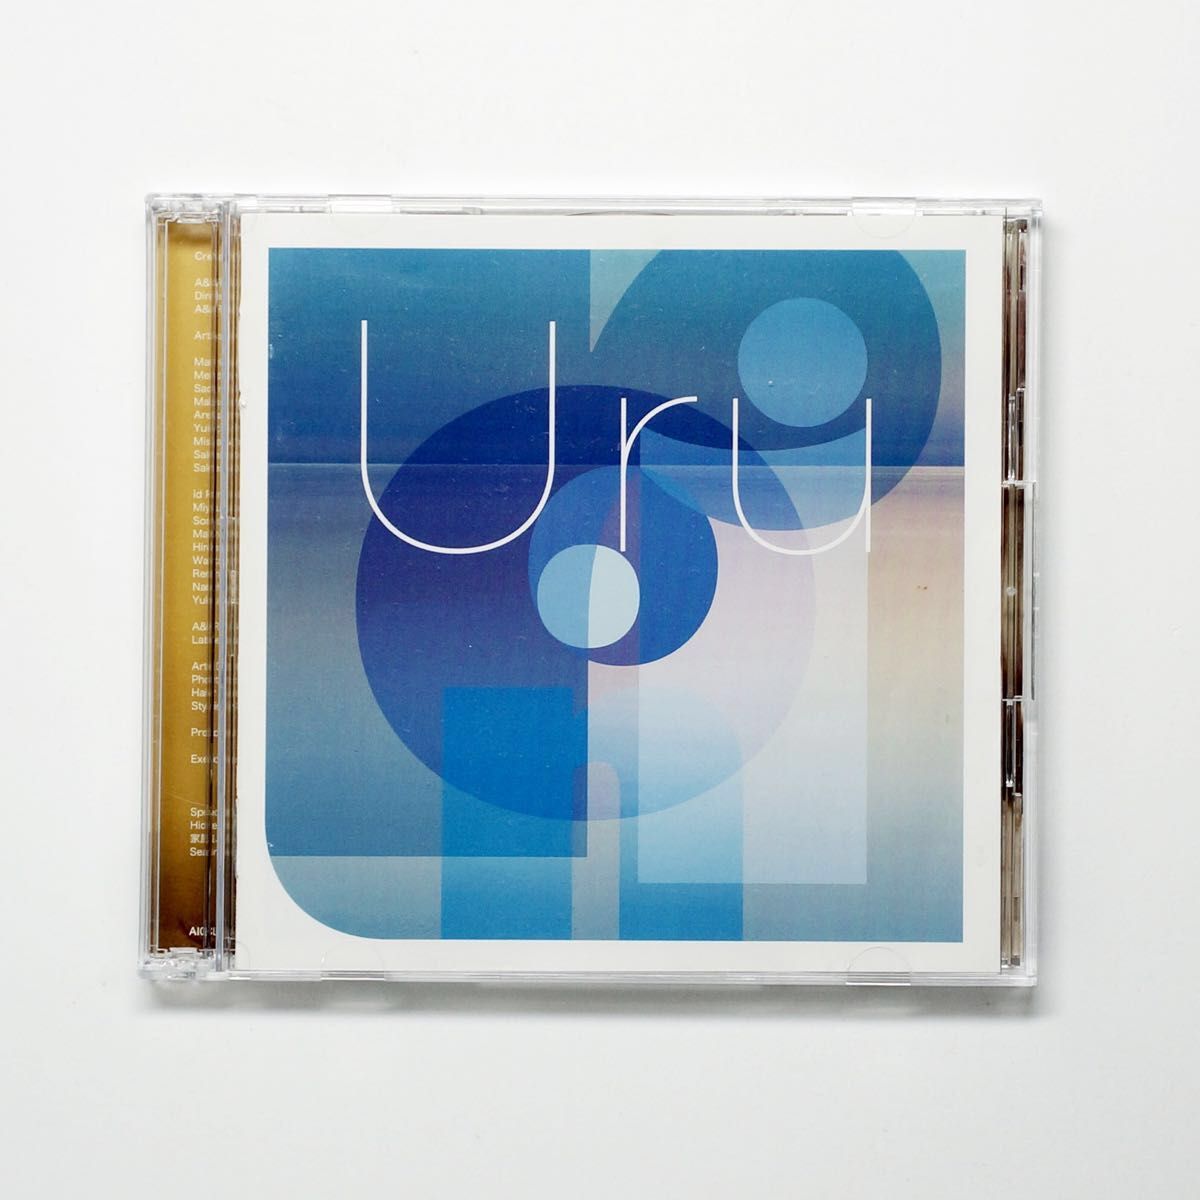 Uru オリオンブルー 初回生産限定盤B (カバー盤)  初回盤B 2CD